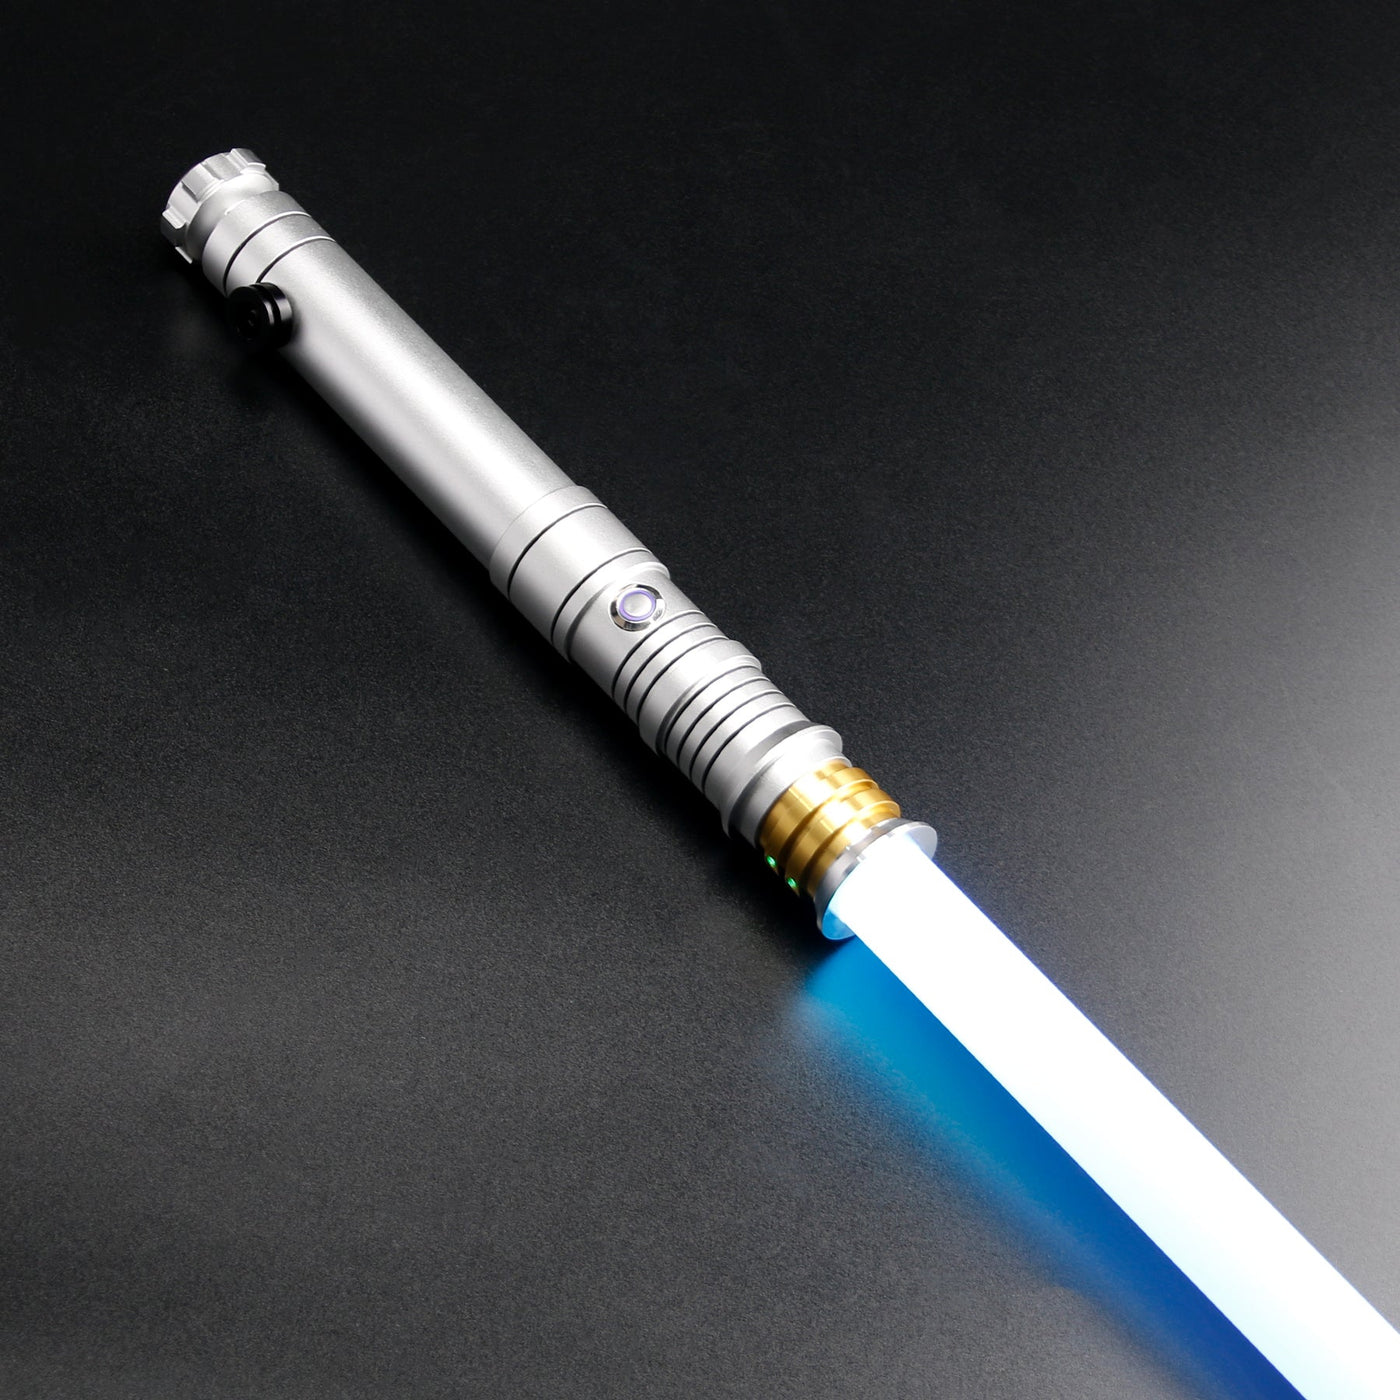 Ascalon - KenJo Sabers - Star Wars Lightsaber replica Jedi Sith - Best sabershop Europe - Nederland light sabers kopen -